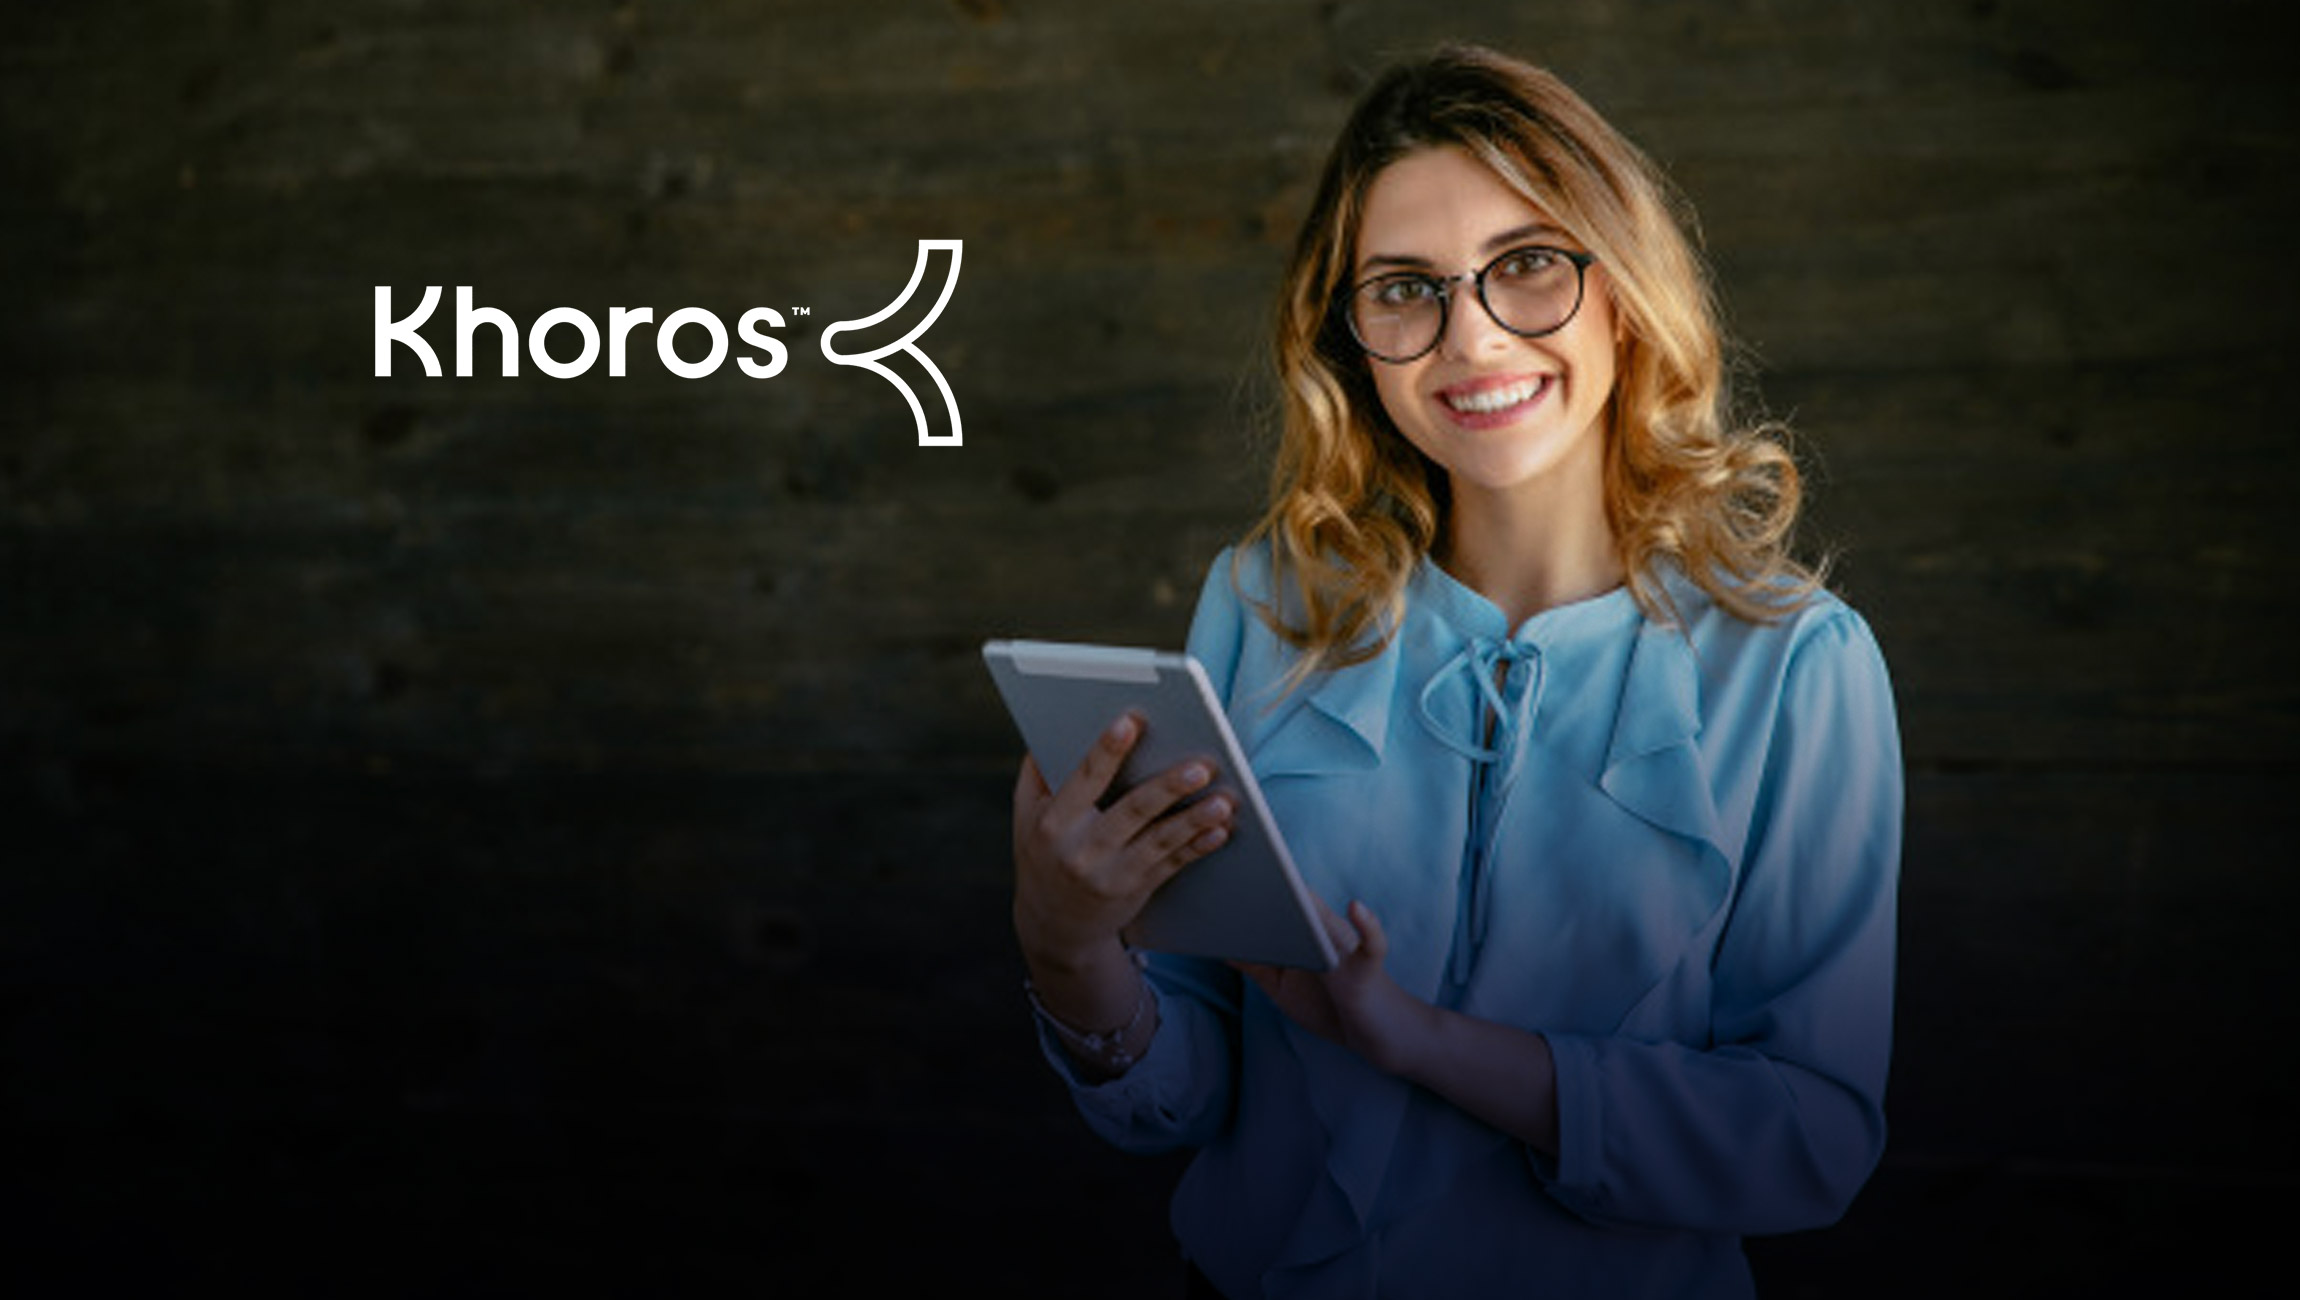 Khoros Announces The Launch Of Khoros Bot To Improve Agent Efficiency